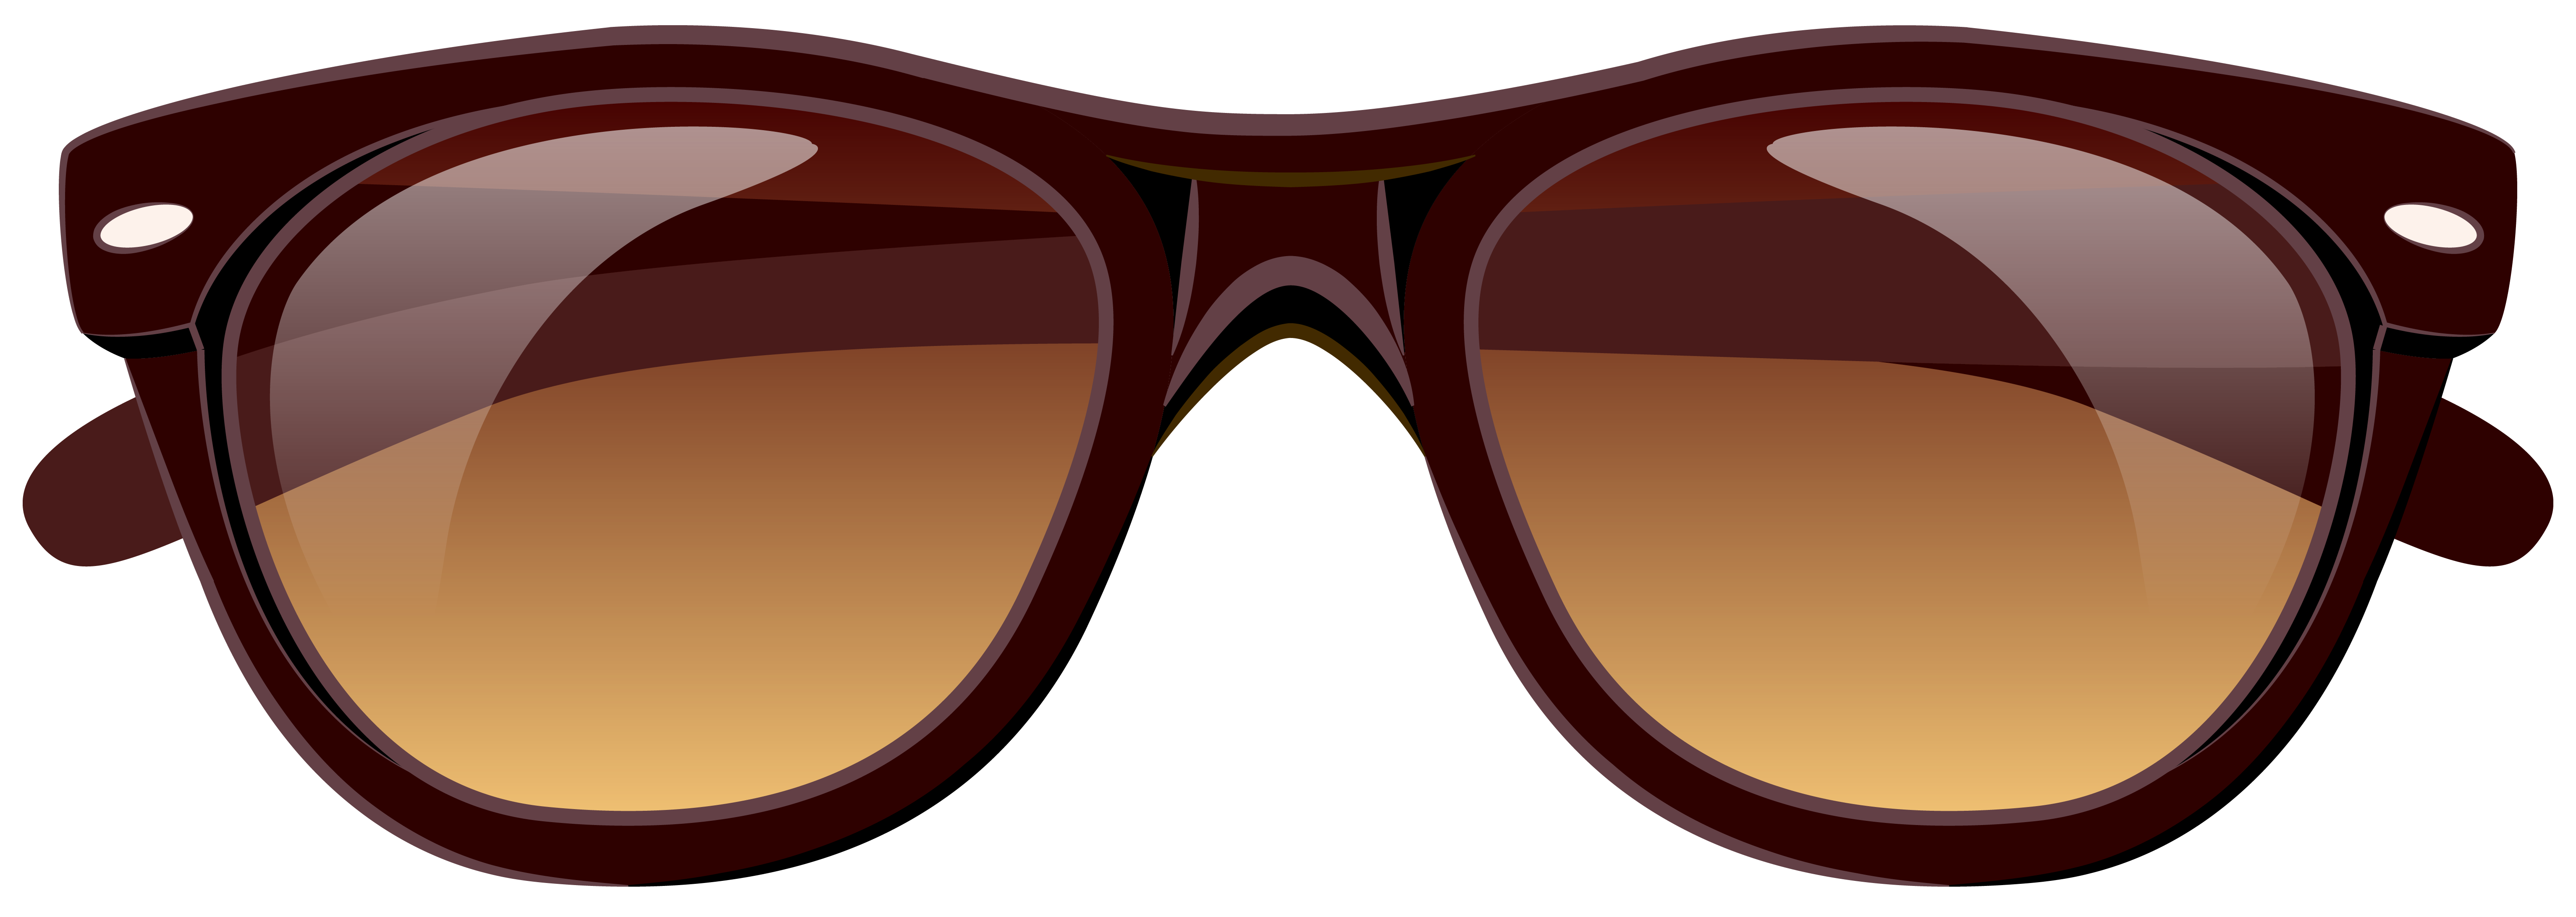 updated sunglasses